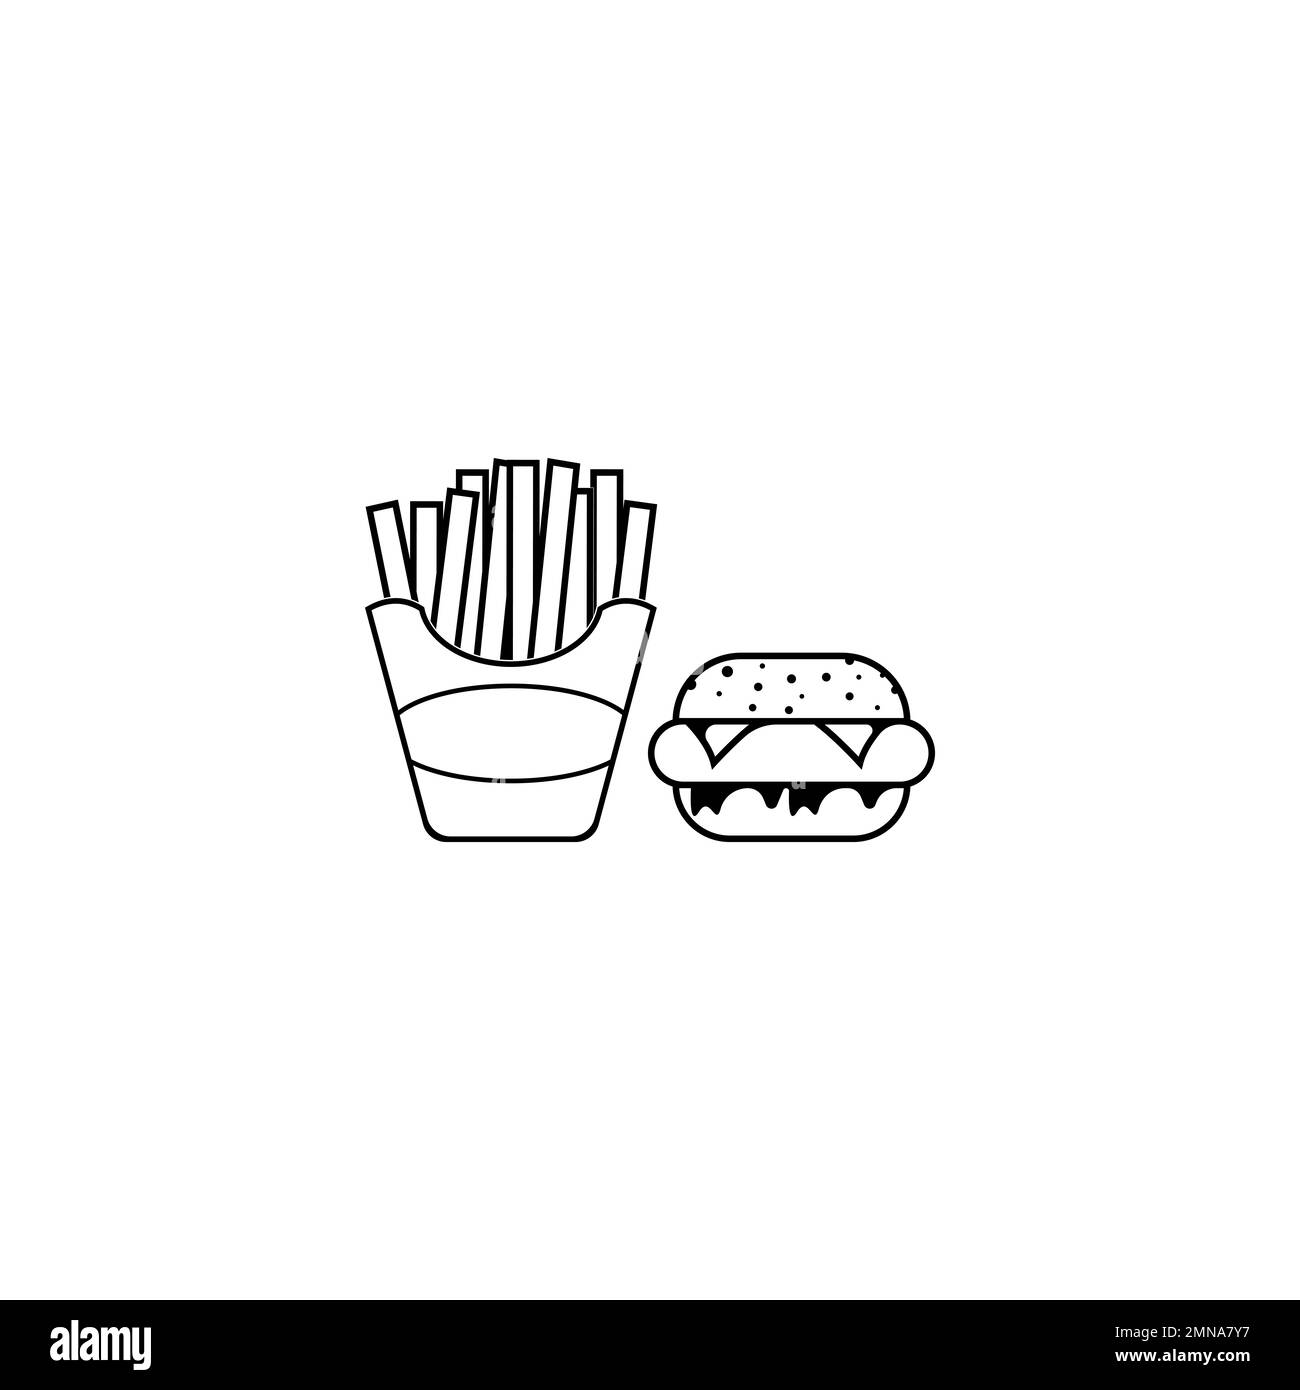 Hamburger icon, Fast food logo design vector illustration. Stock Photo